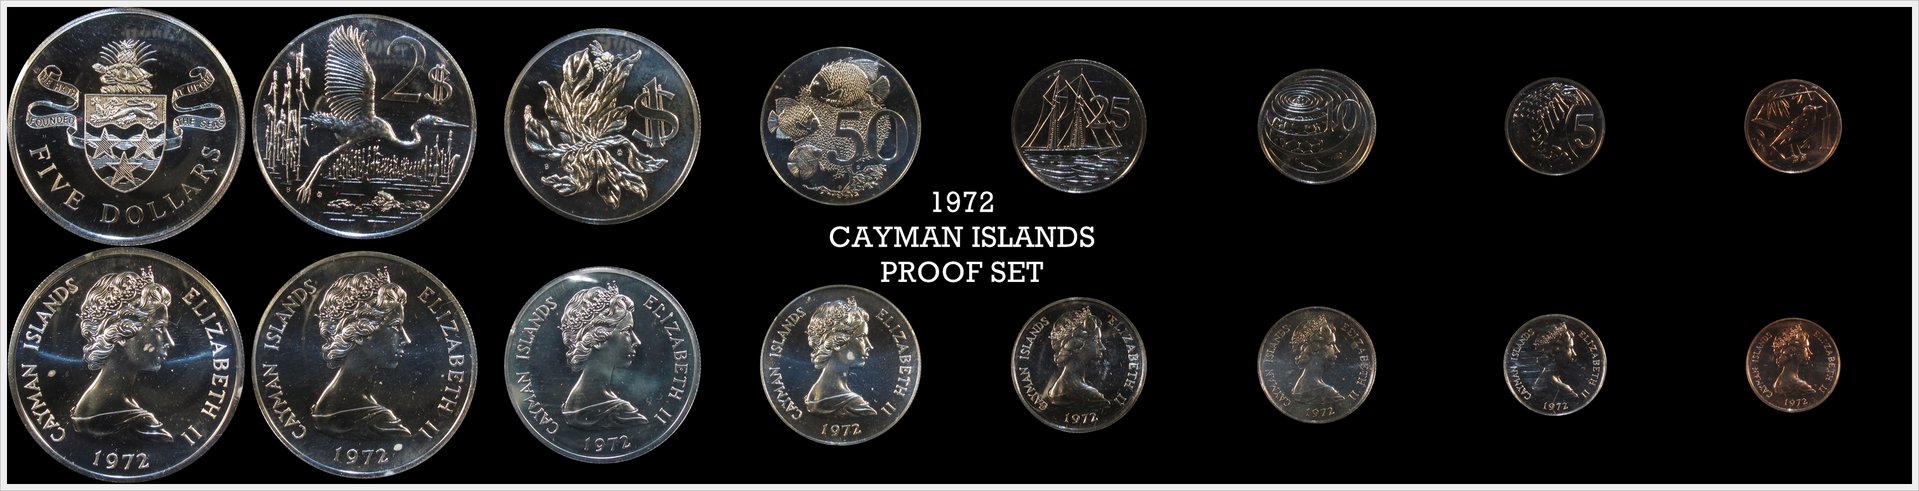 Cayman Islands 1972 Proof Set.jpg